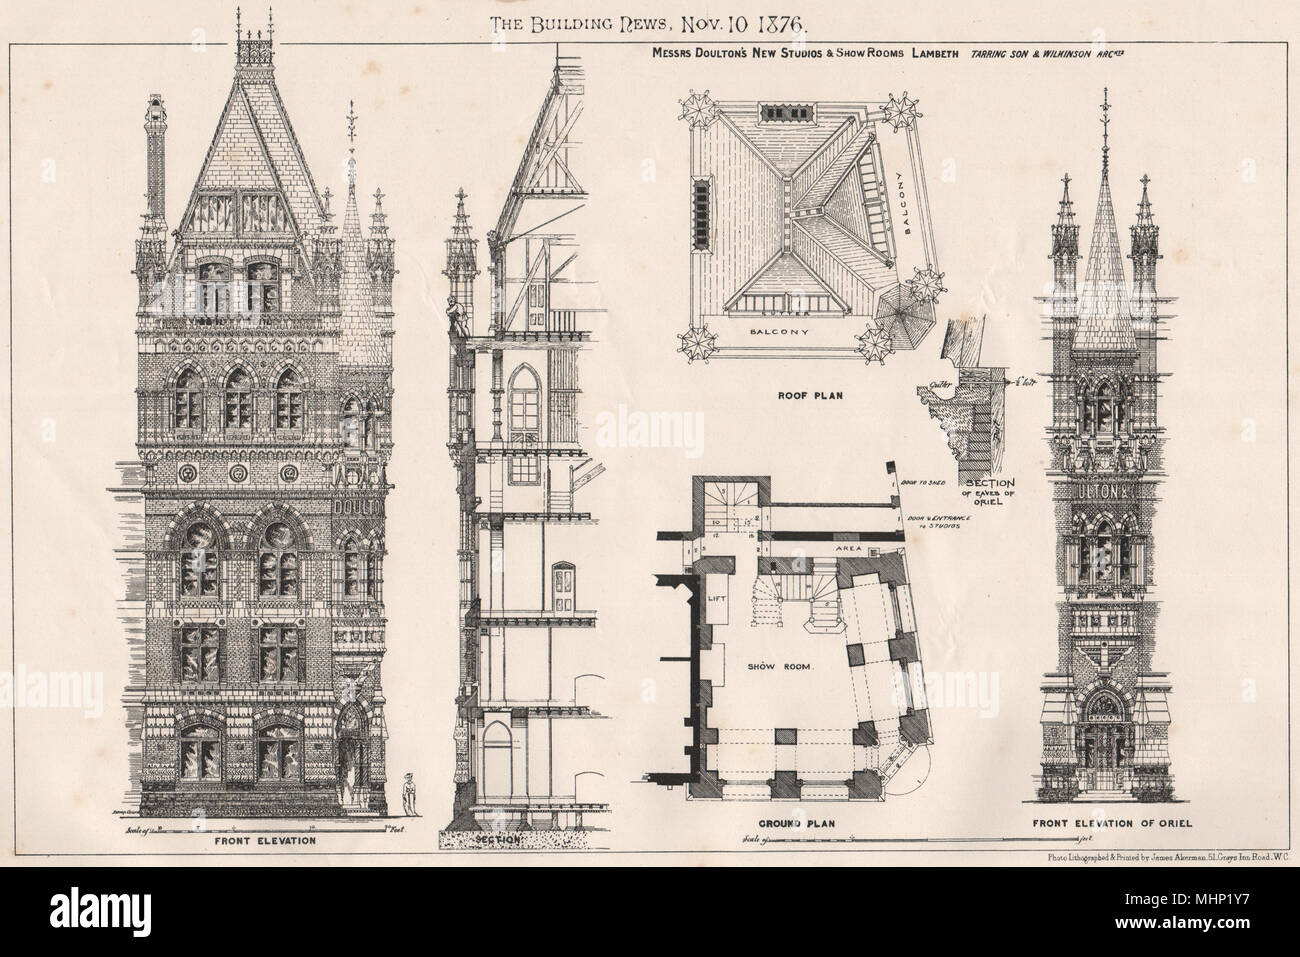 Die doulton neue Studios und Zimmer, Lambeth; Teeren Sohn & Wilkinson 1876 Stockfoto